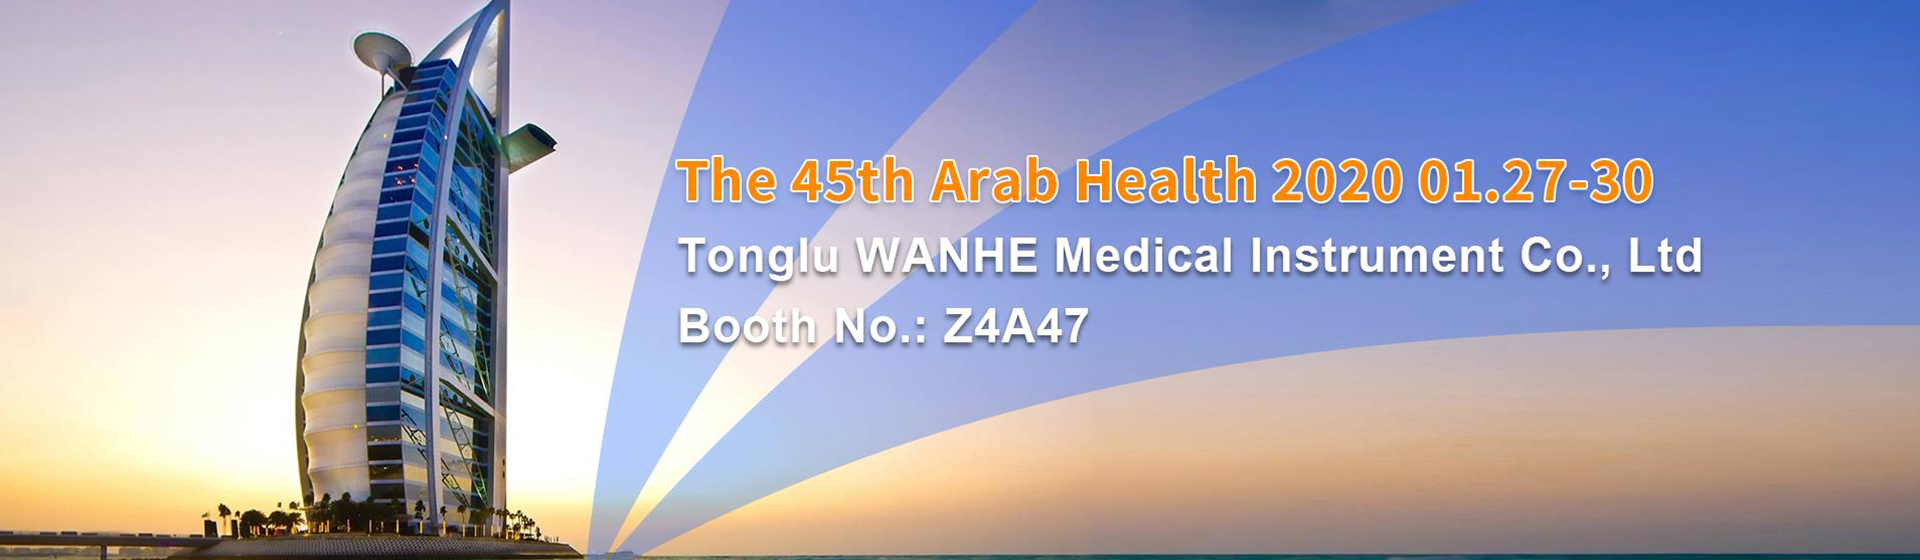 Tonglu WANHE Medical Instrument Co., Ltd